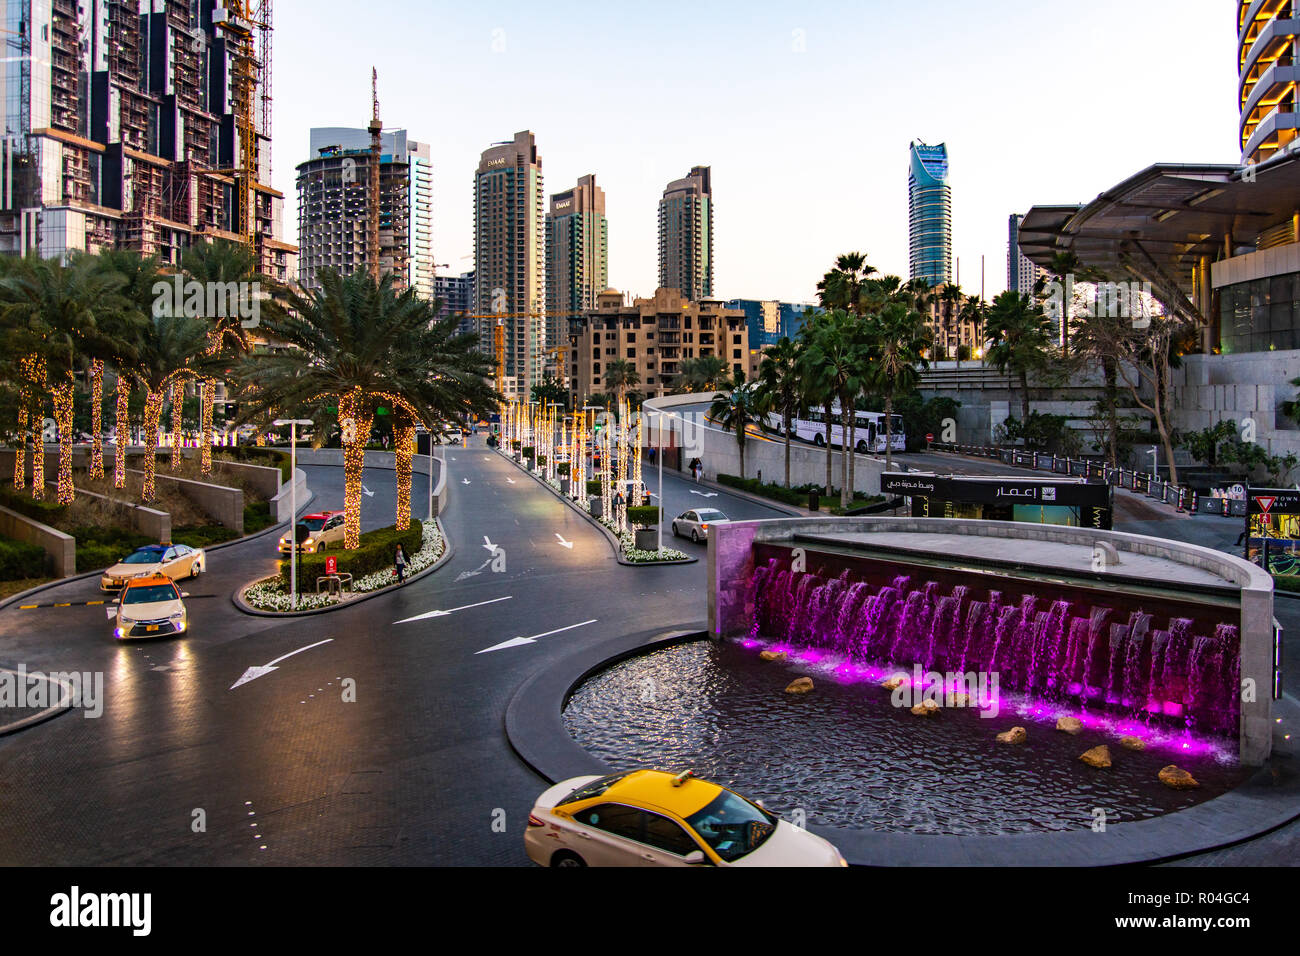 Dubai, United Arab Emirates - February 5, 2018: Dubai mall busy entrance with many taxis and the fountain at dusk Stock Photo